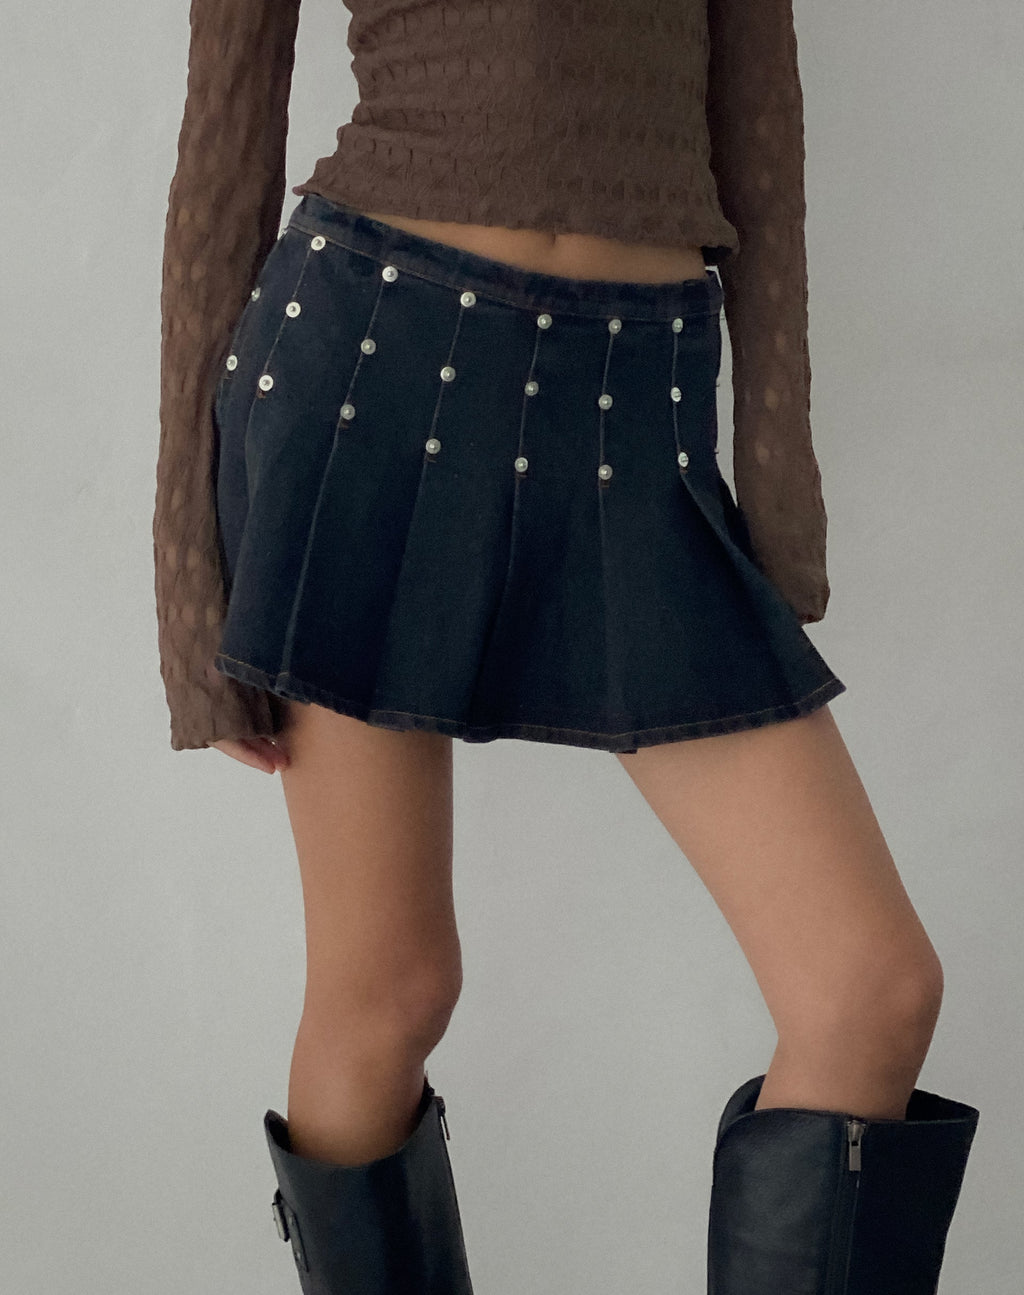 Gatlin Pleated Denim Mini Skirt in Black Wash with Studs